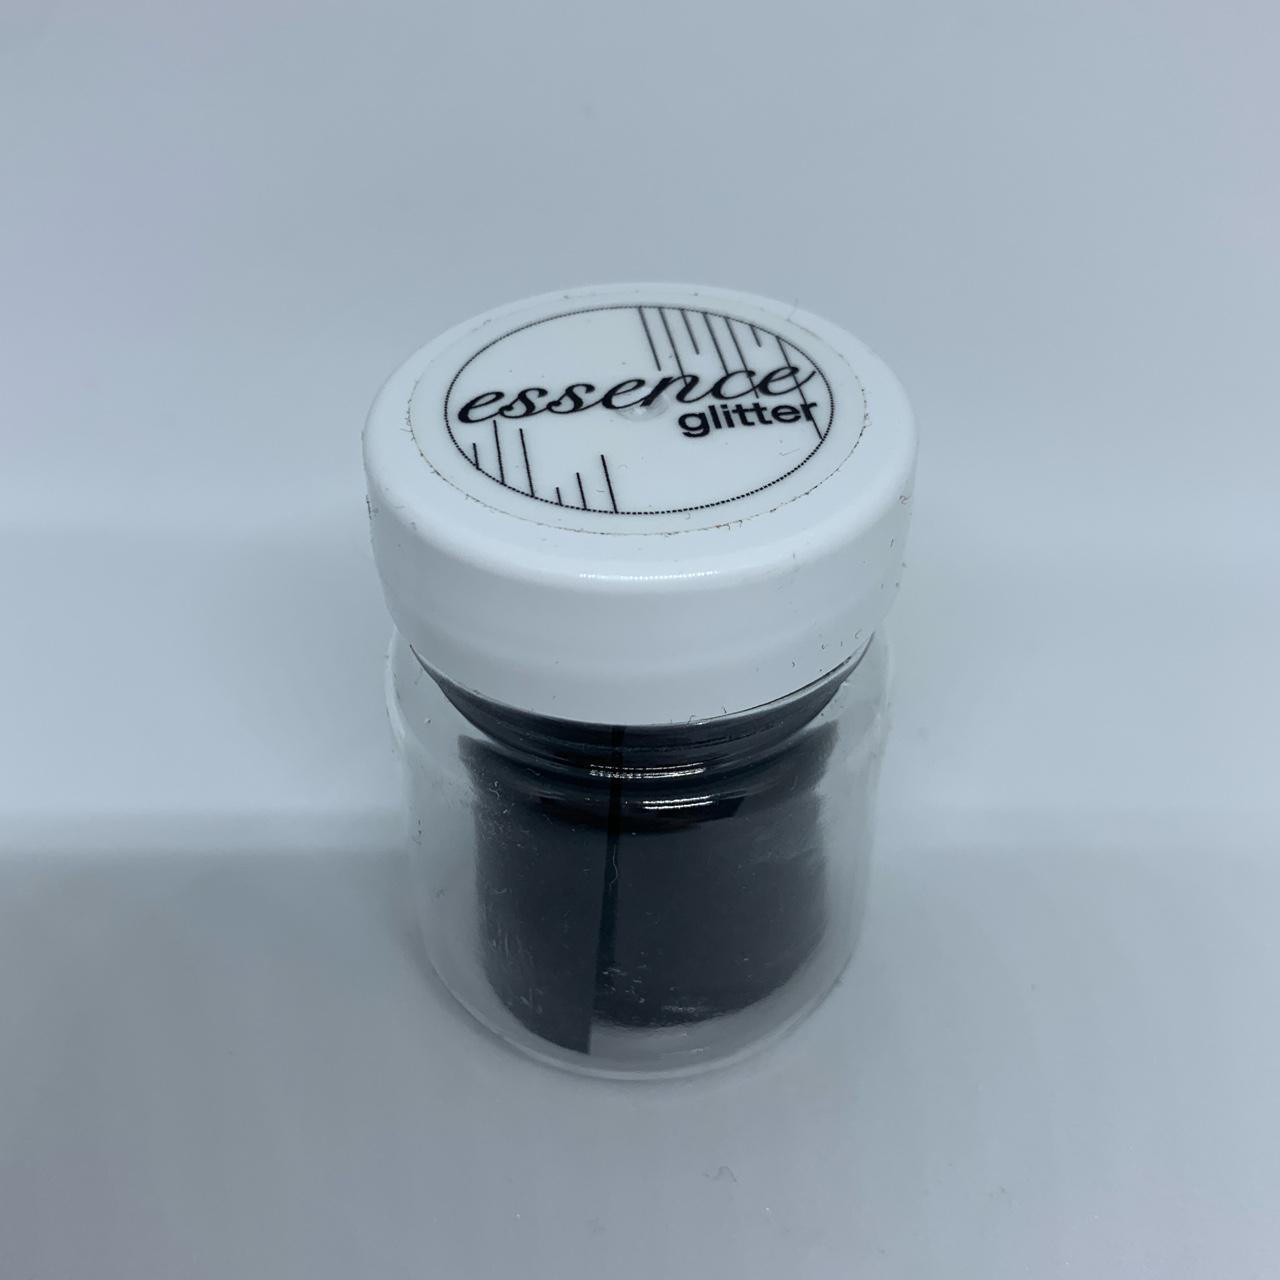 Product Image 1 - Essence glitter black nail art